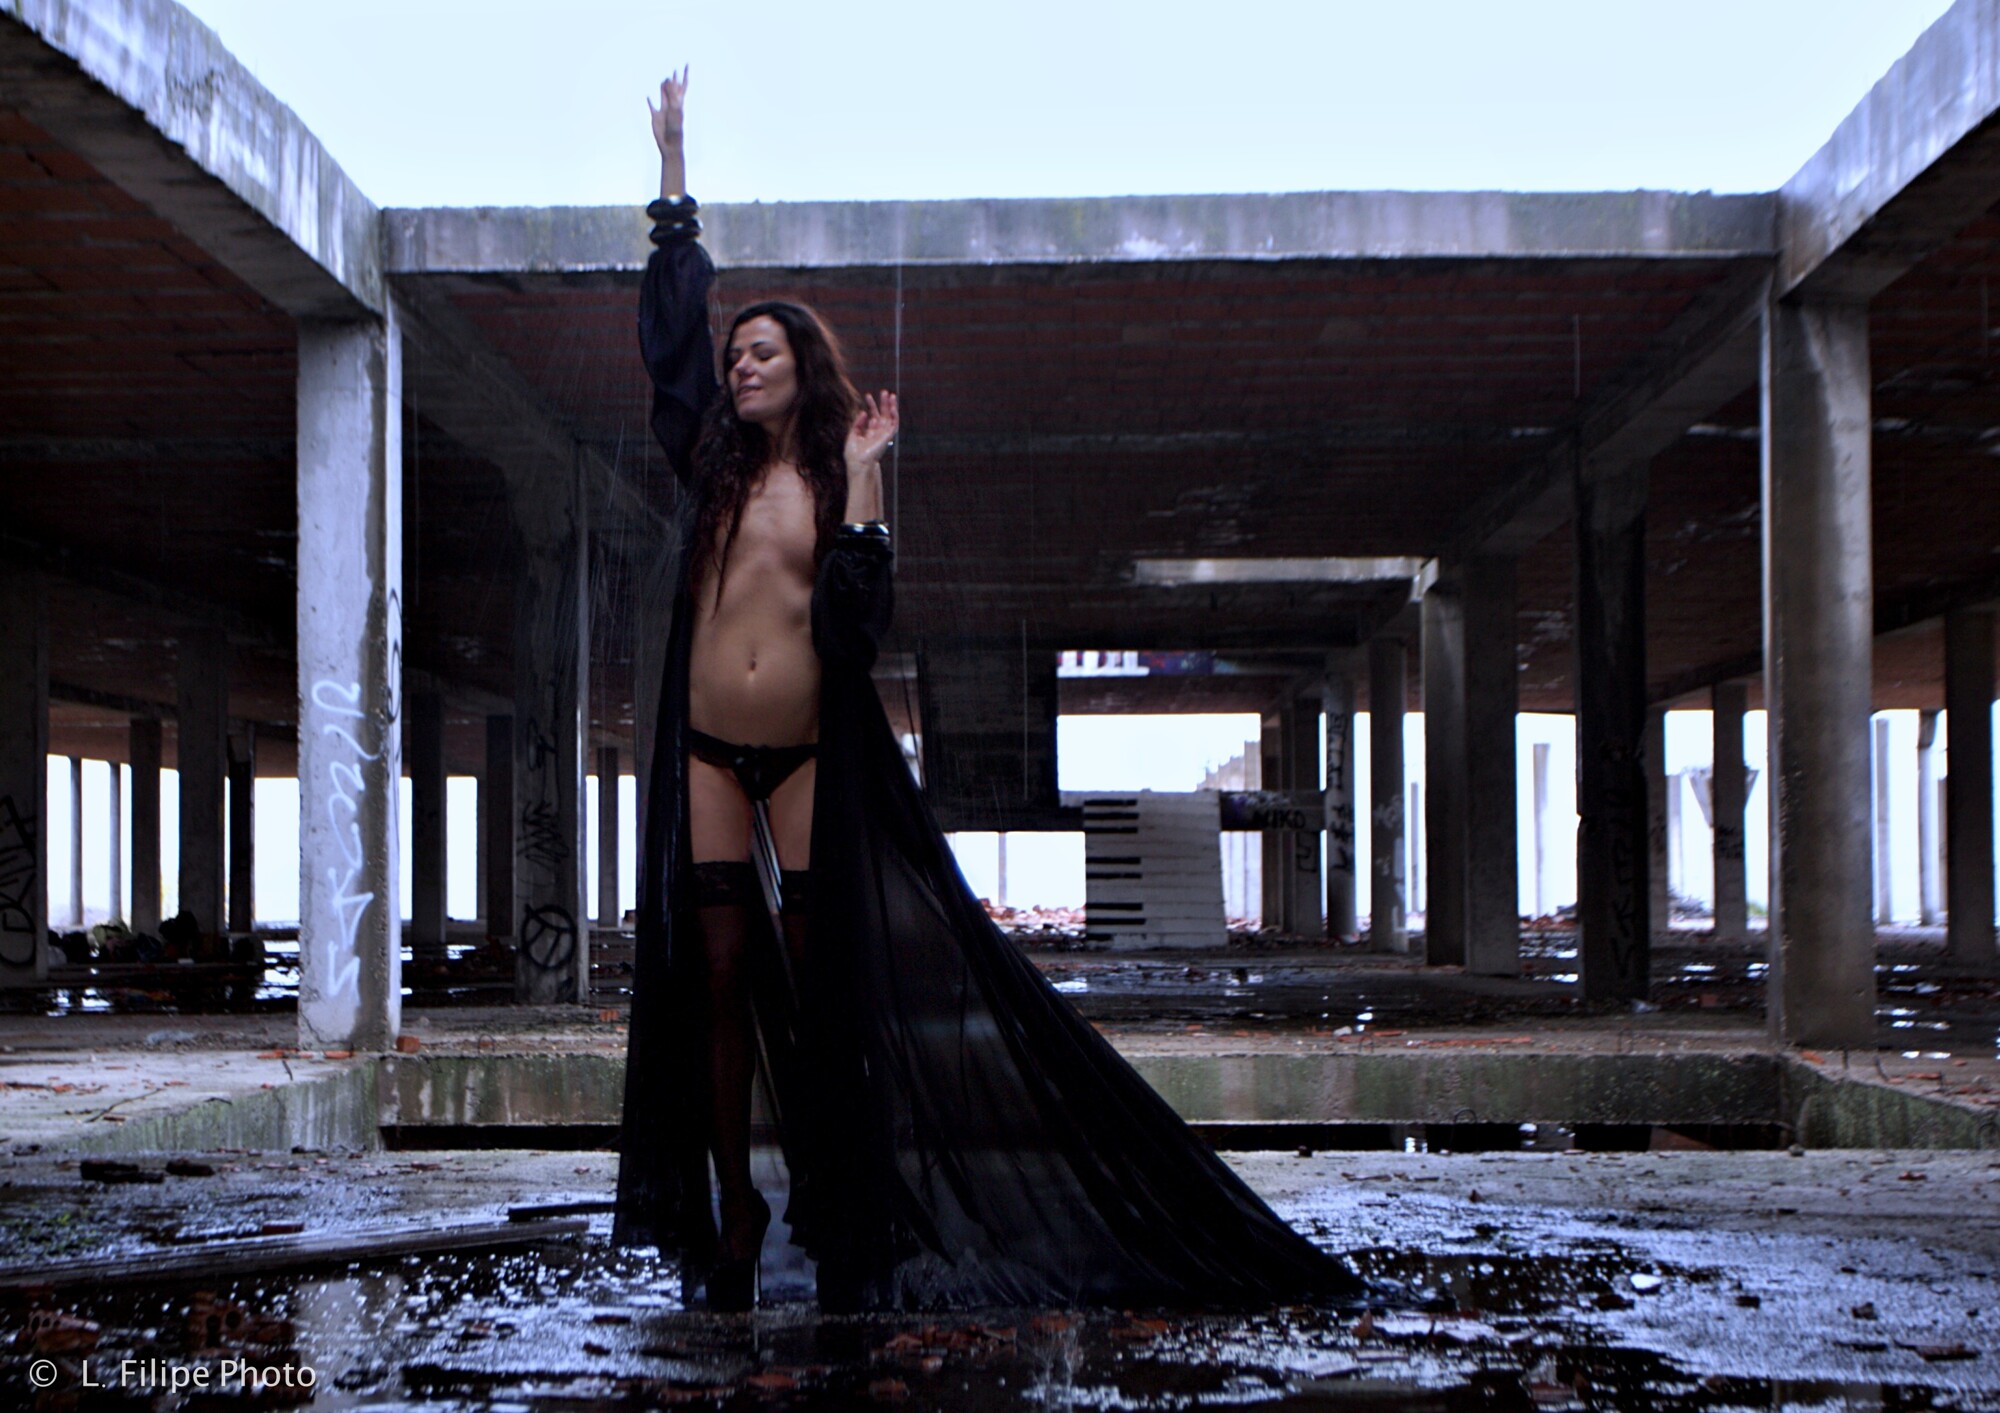 Luis Filipe Photographer - elefeceria-l-filipe-photo-shootin-fashion-nude-boudoir.jpg